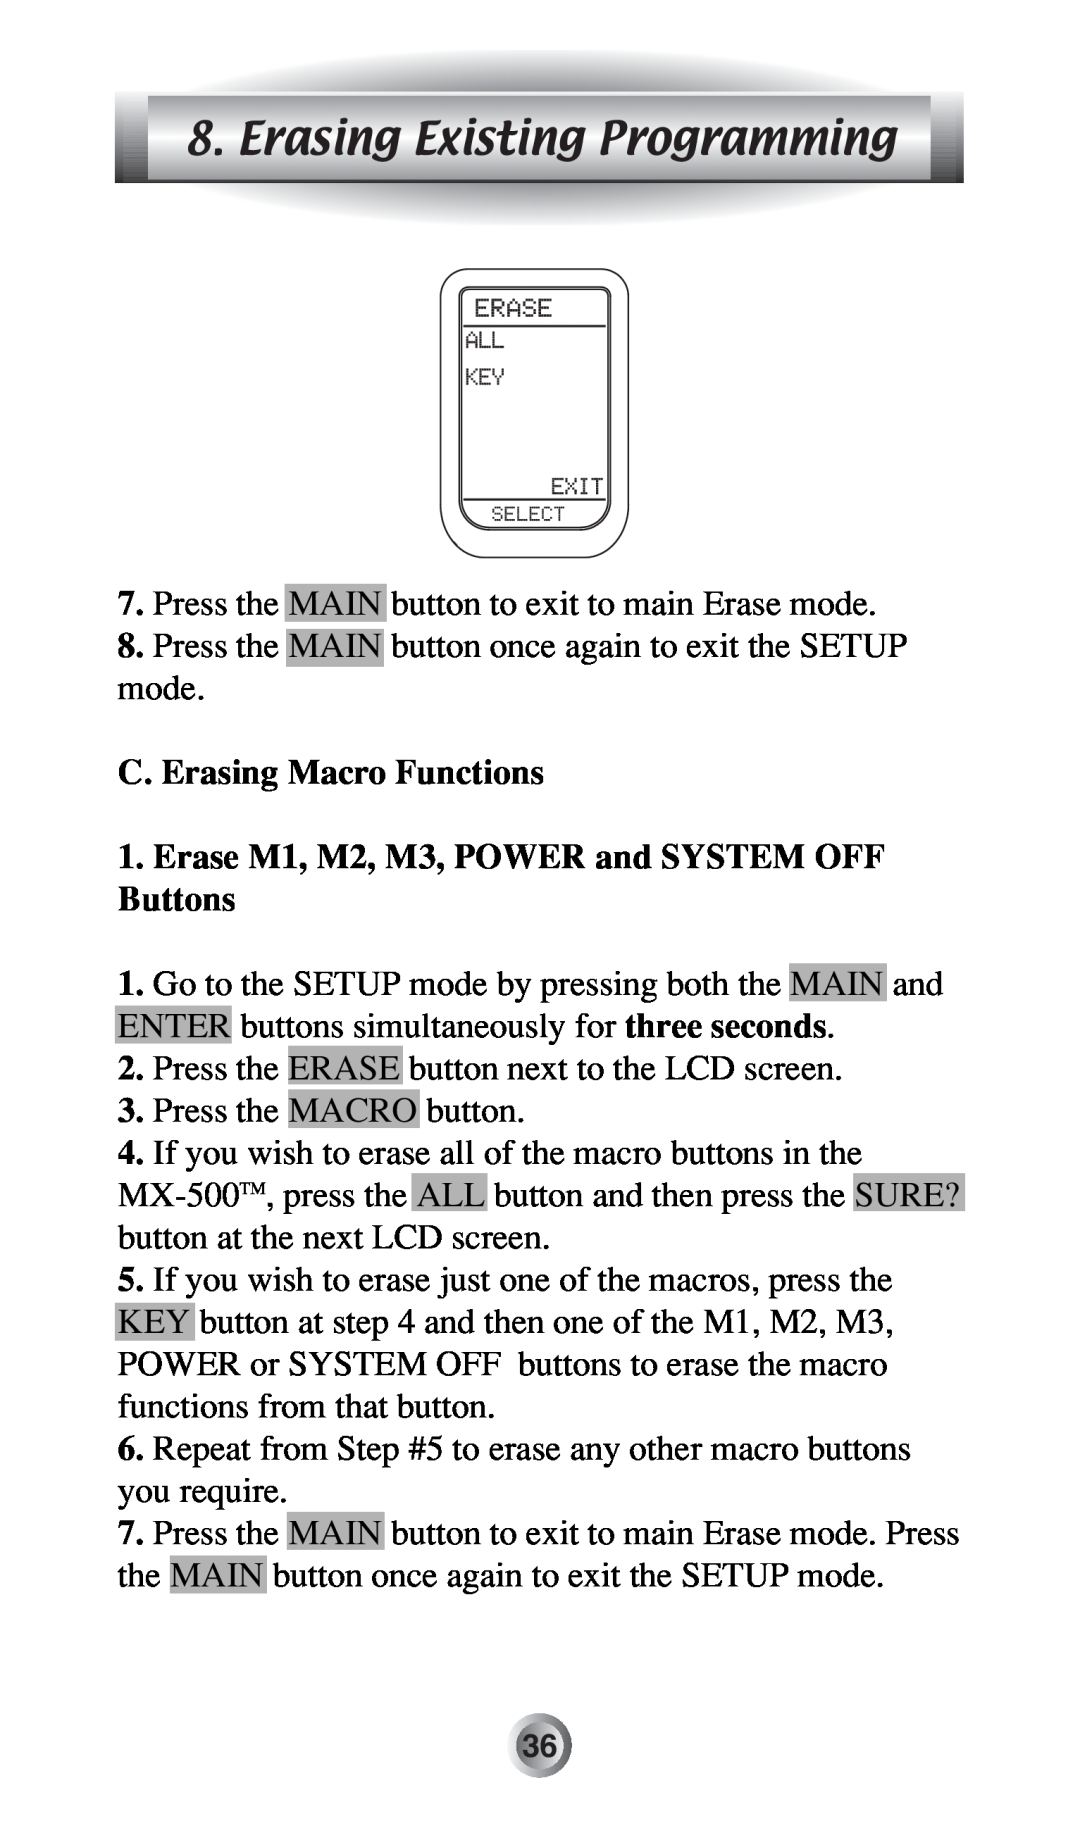 Radio Shack MX-500TM manual Erasing Existing Programming, C. Erasing Macro Functions 